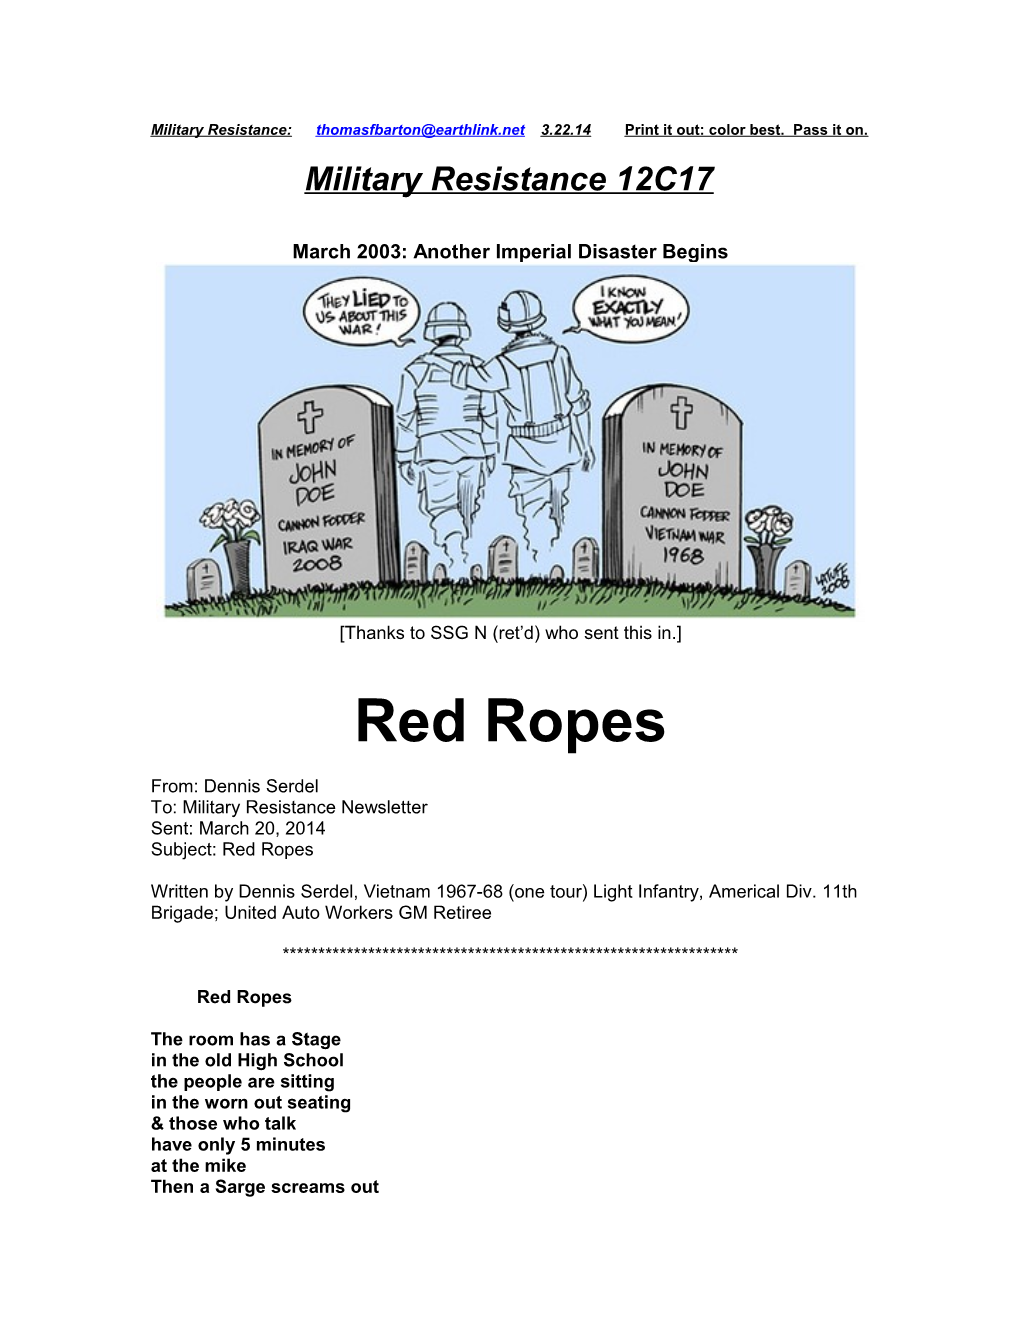 Military Resistance 12C17